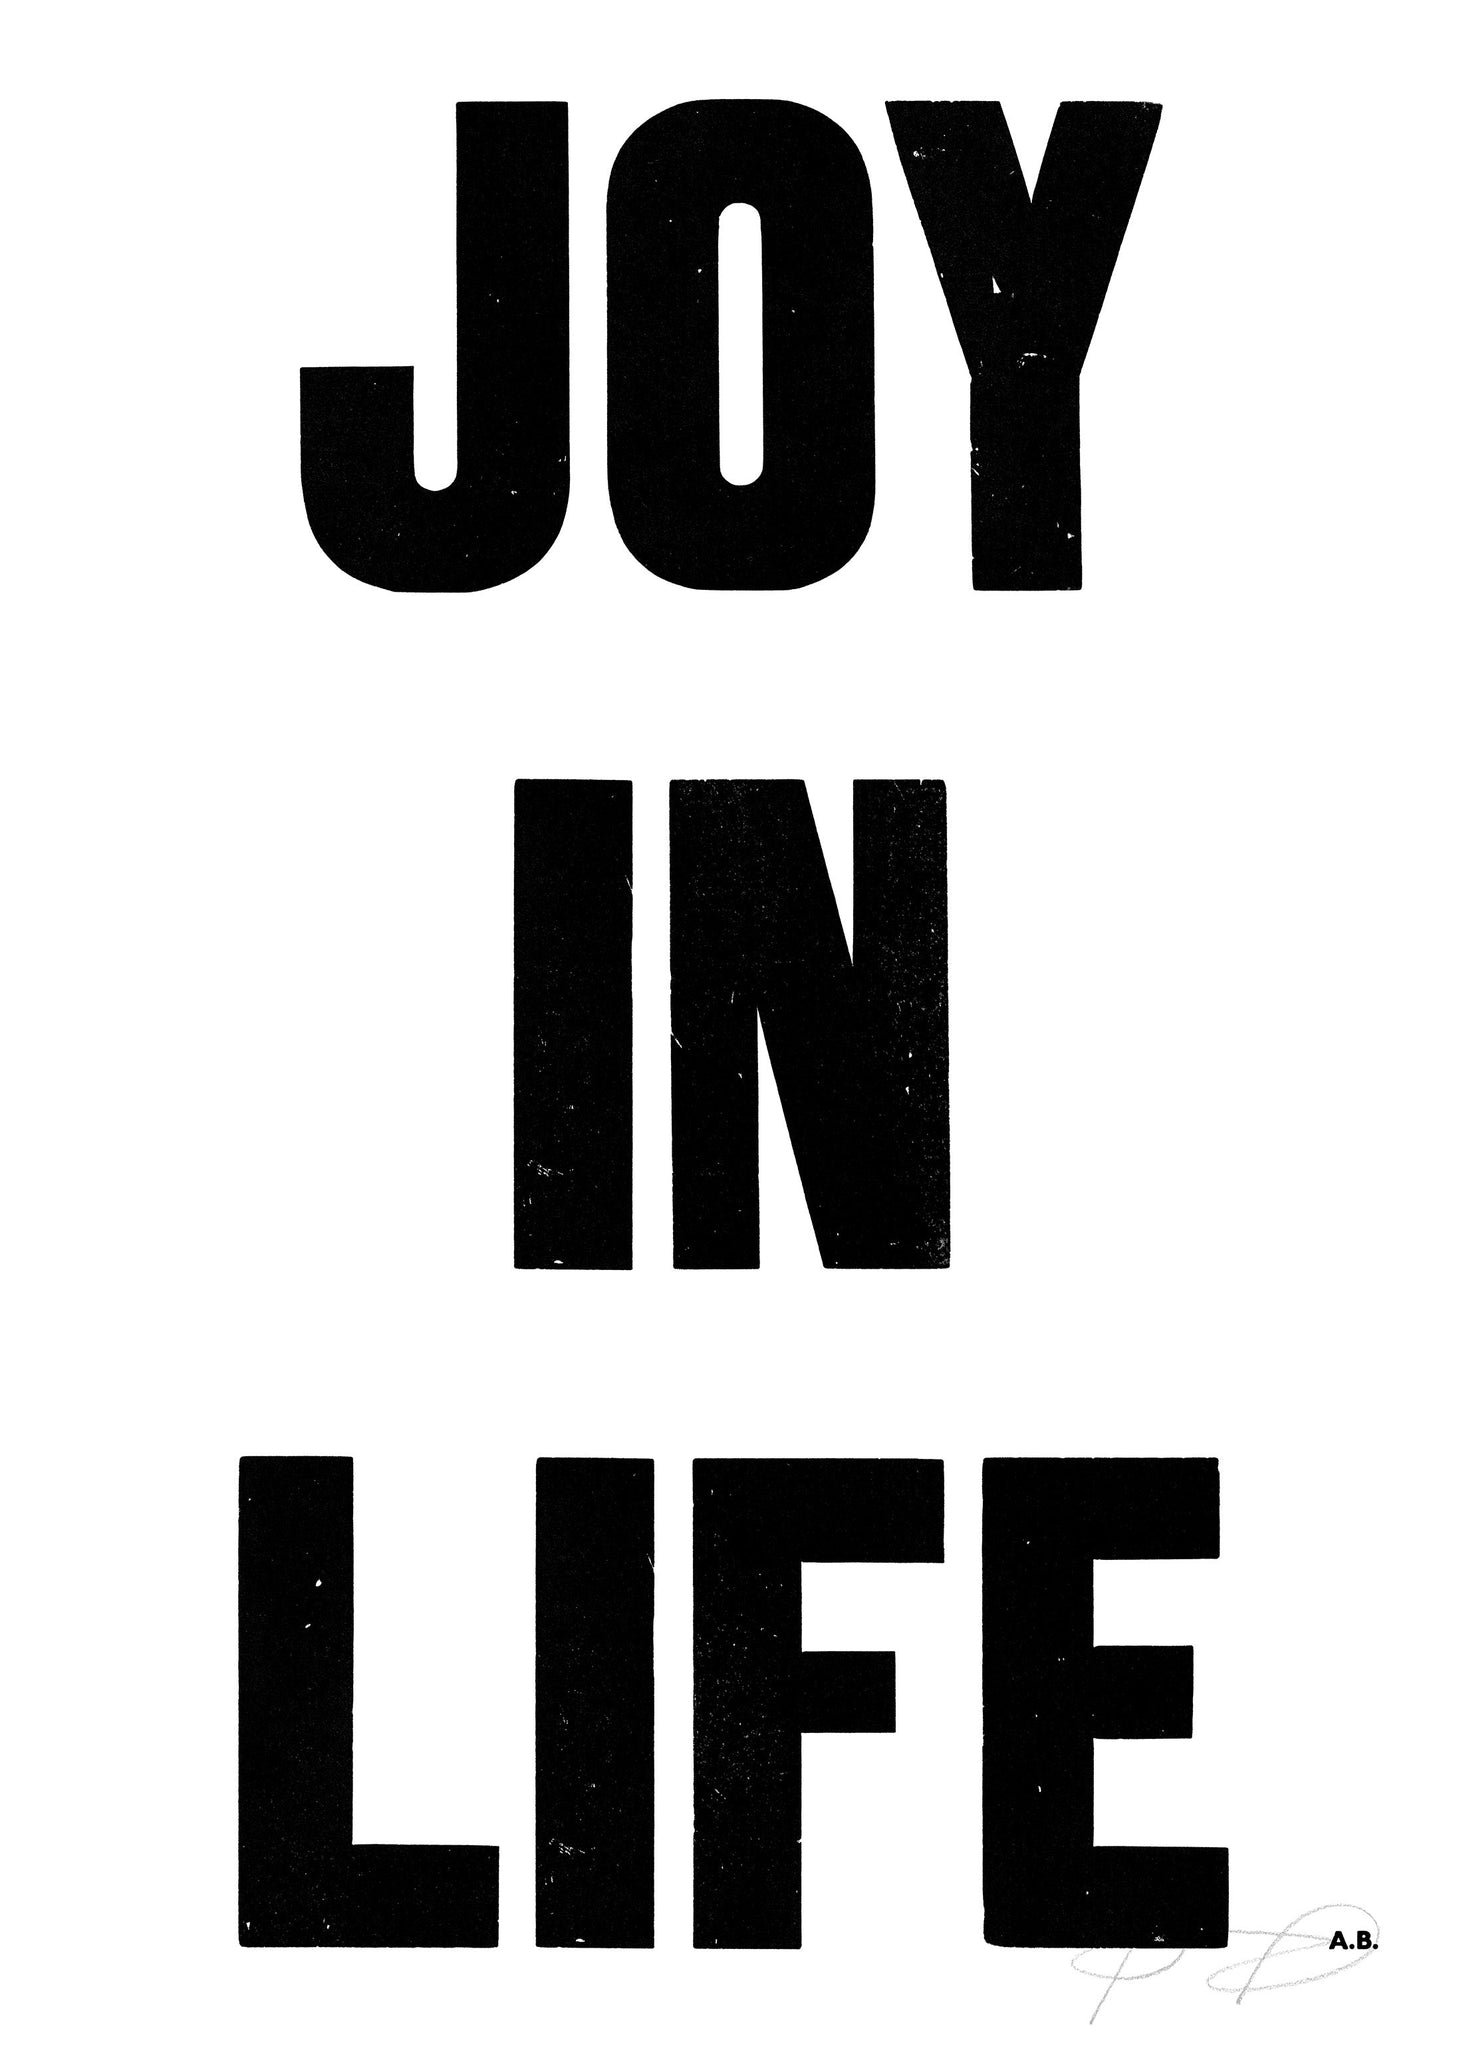 Joy In Life